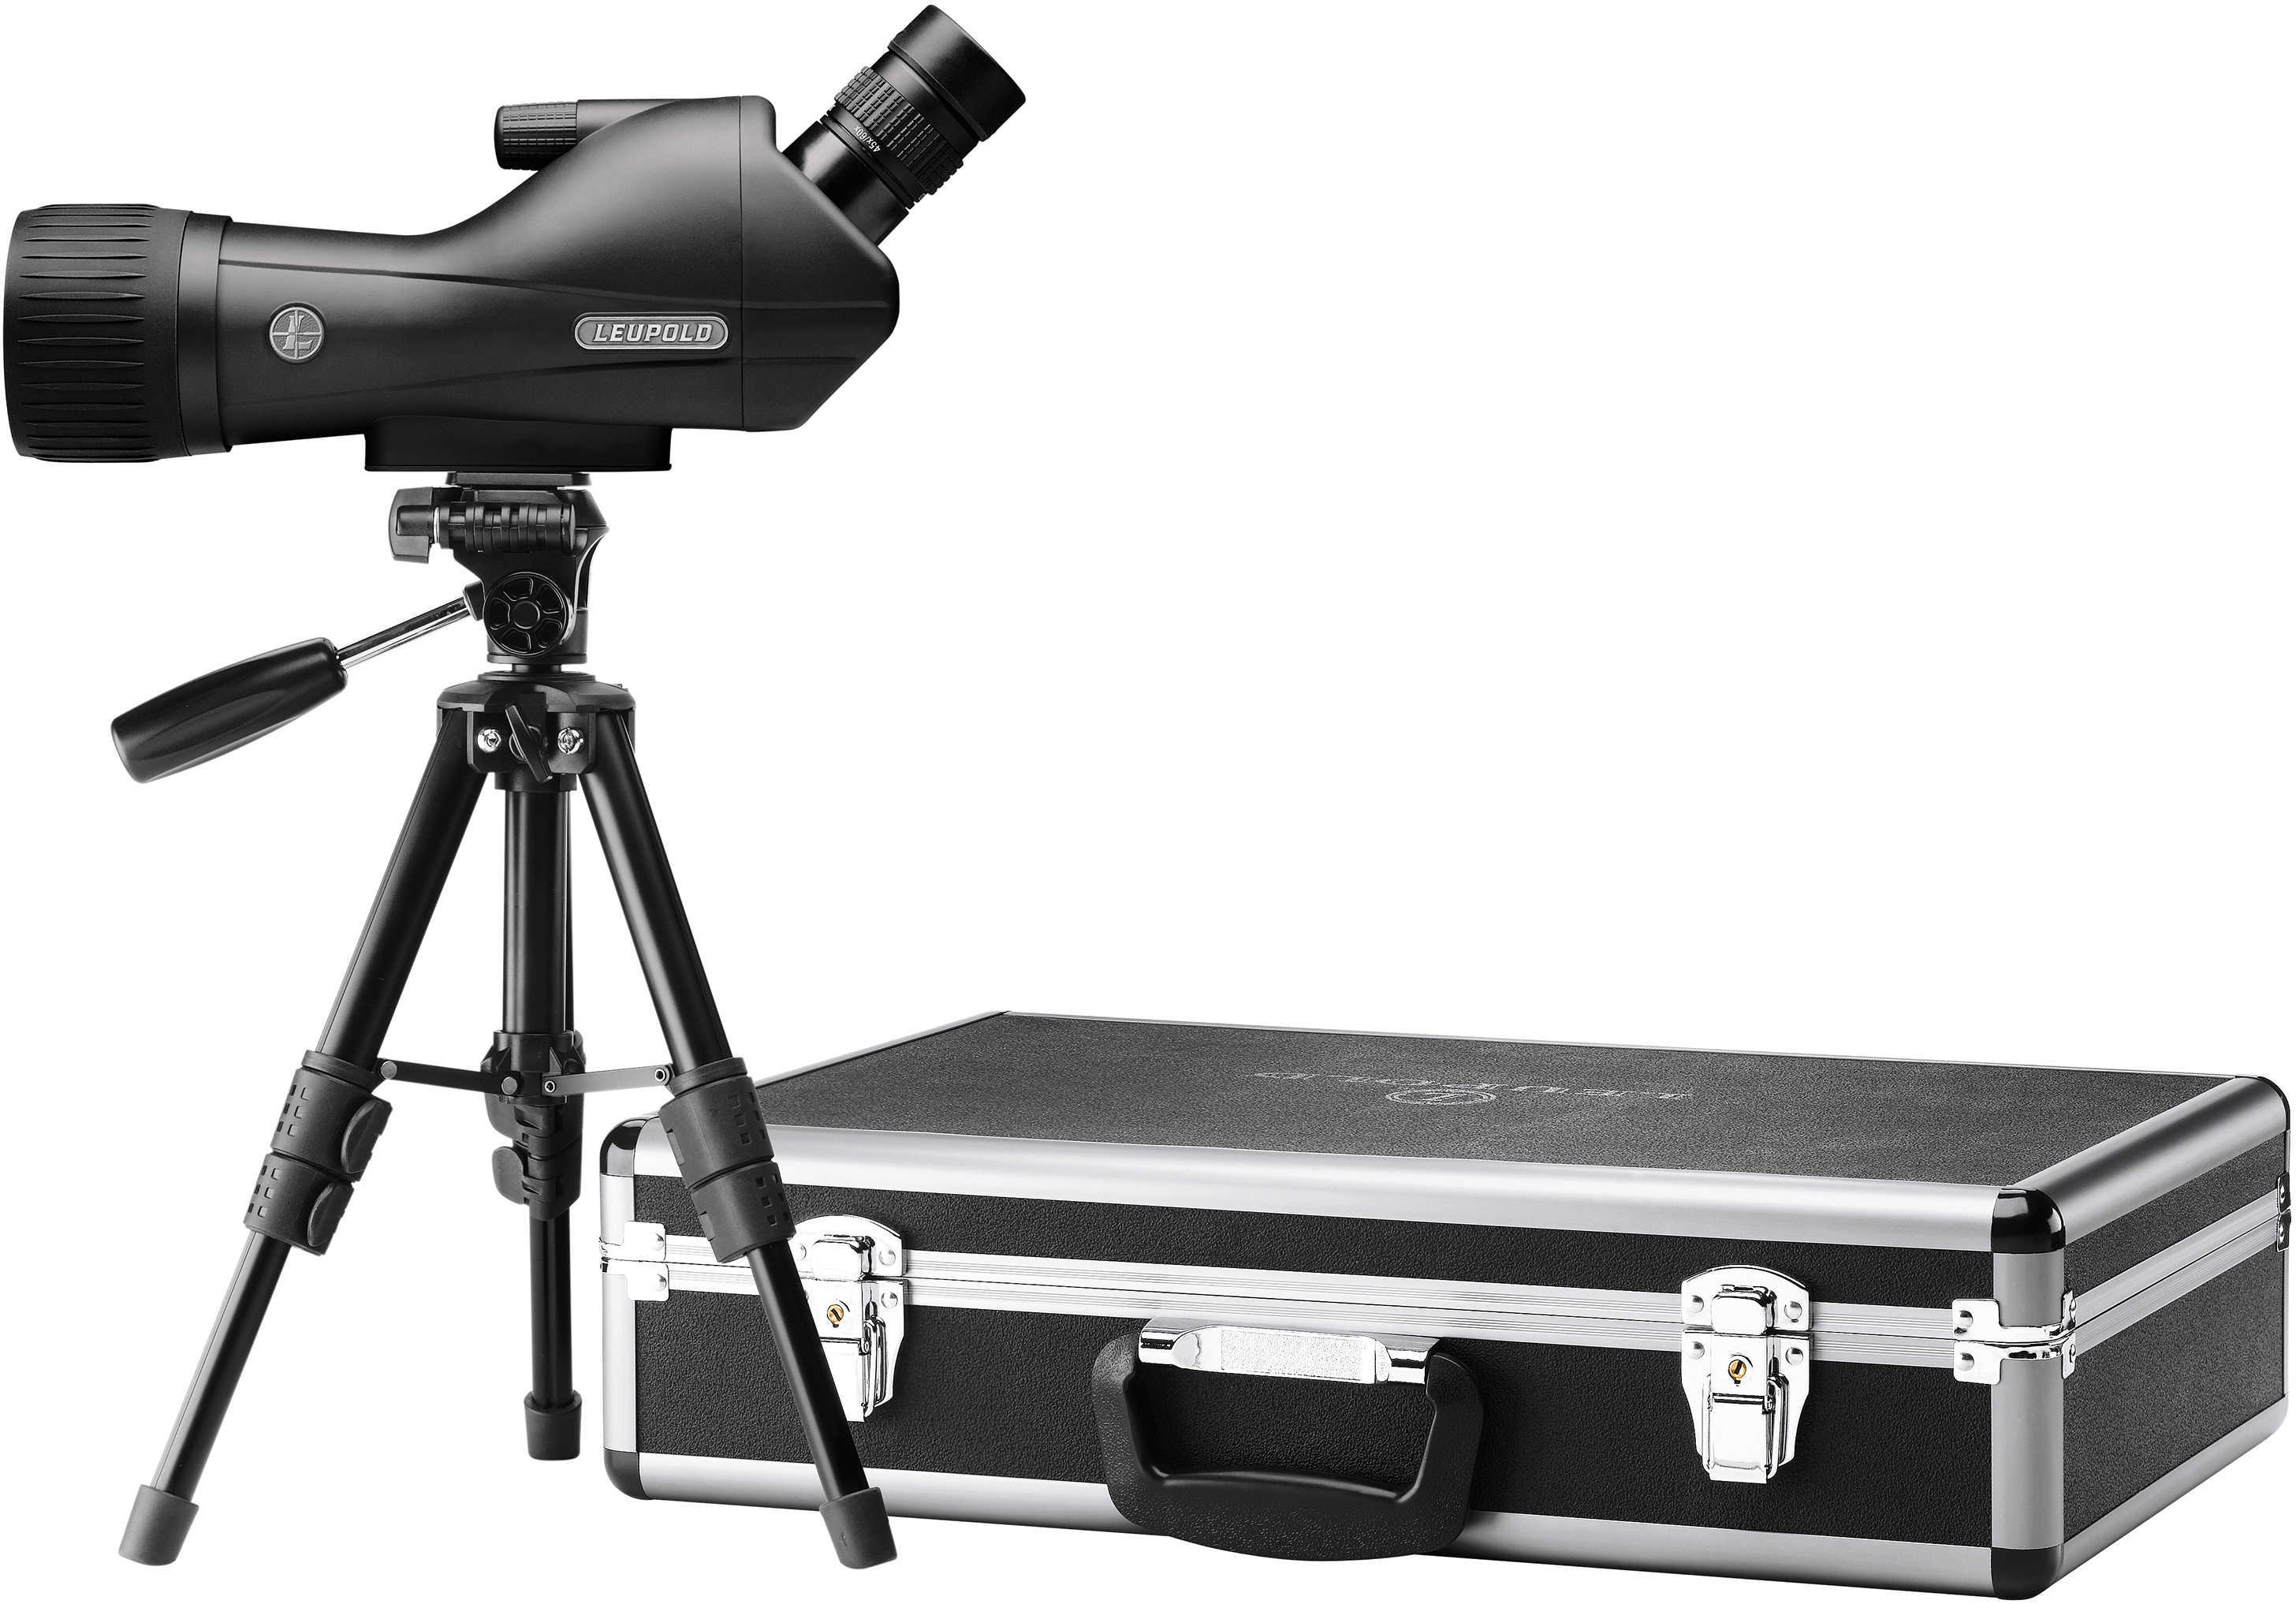 Leupold SX-1 Ventana Spotting Scope Kit 15-45X60 Black/Gray Angled Eye Piece Includes Compact Tripod Hard Case And Lens